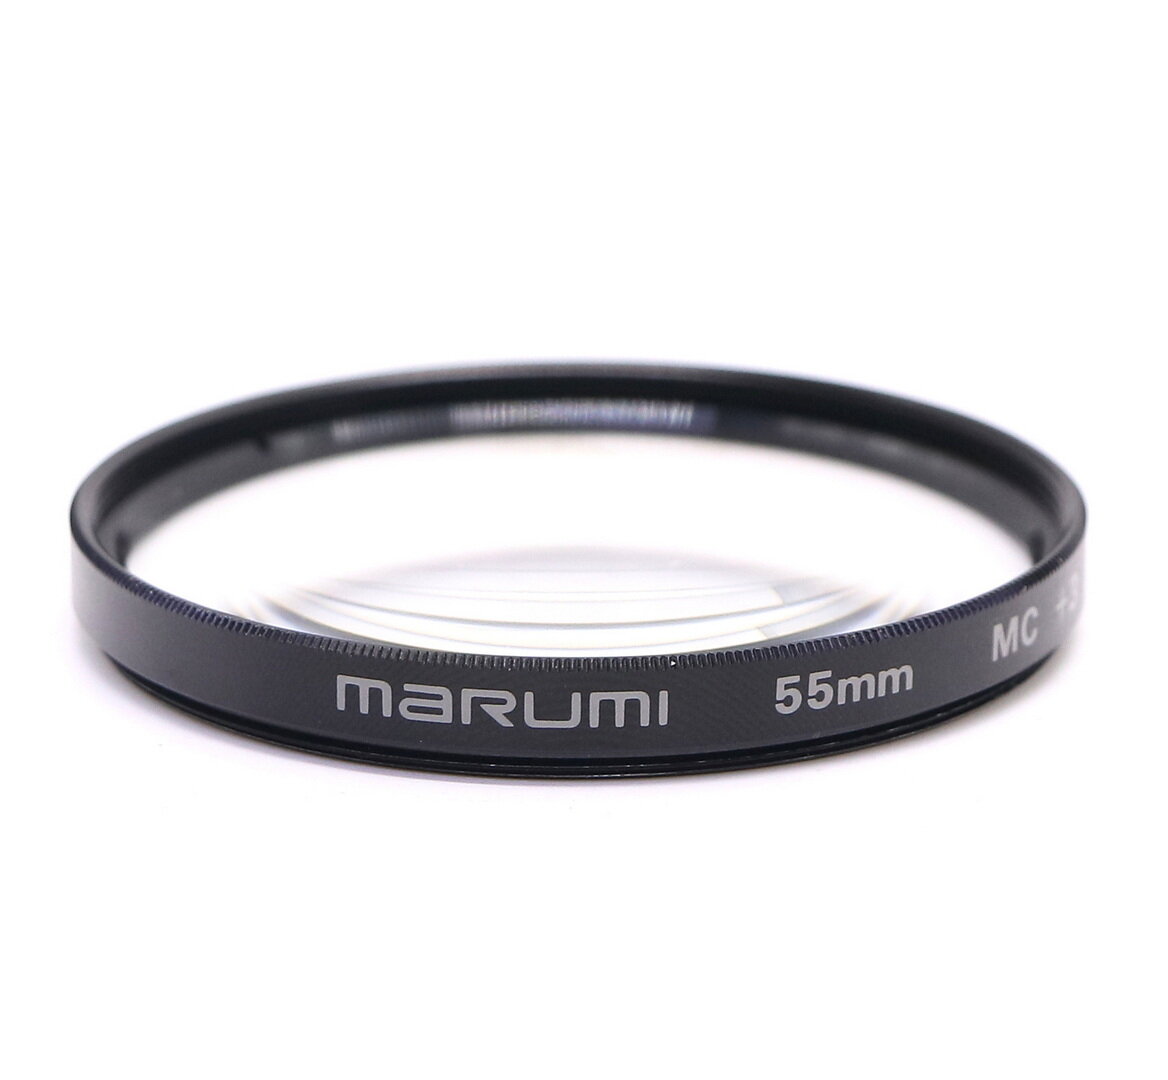 Светофильтр Marumi 55mm Close-up MC +3